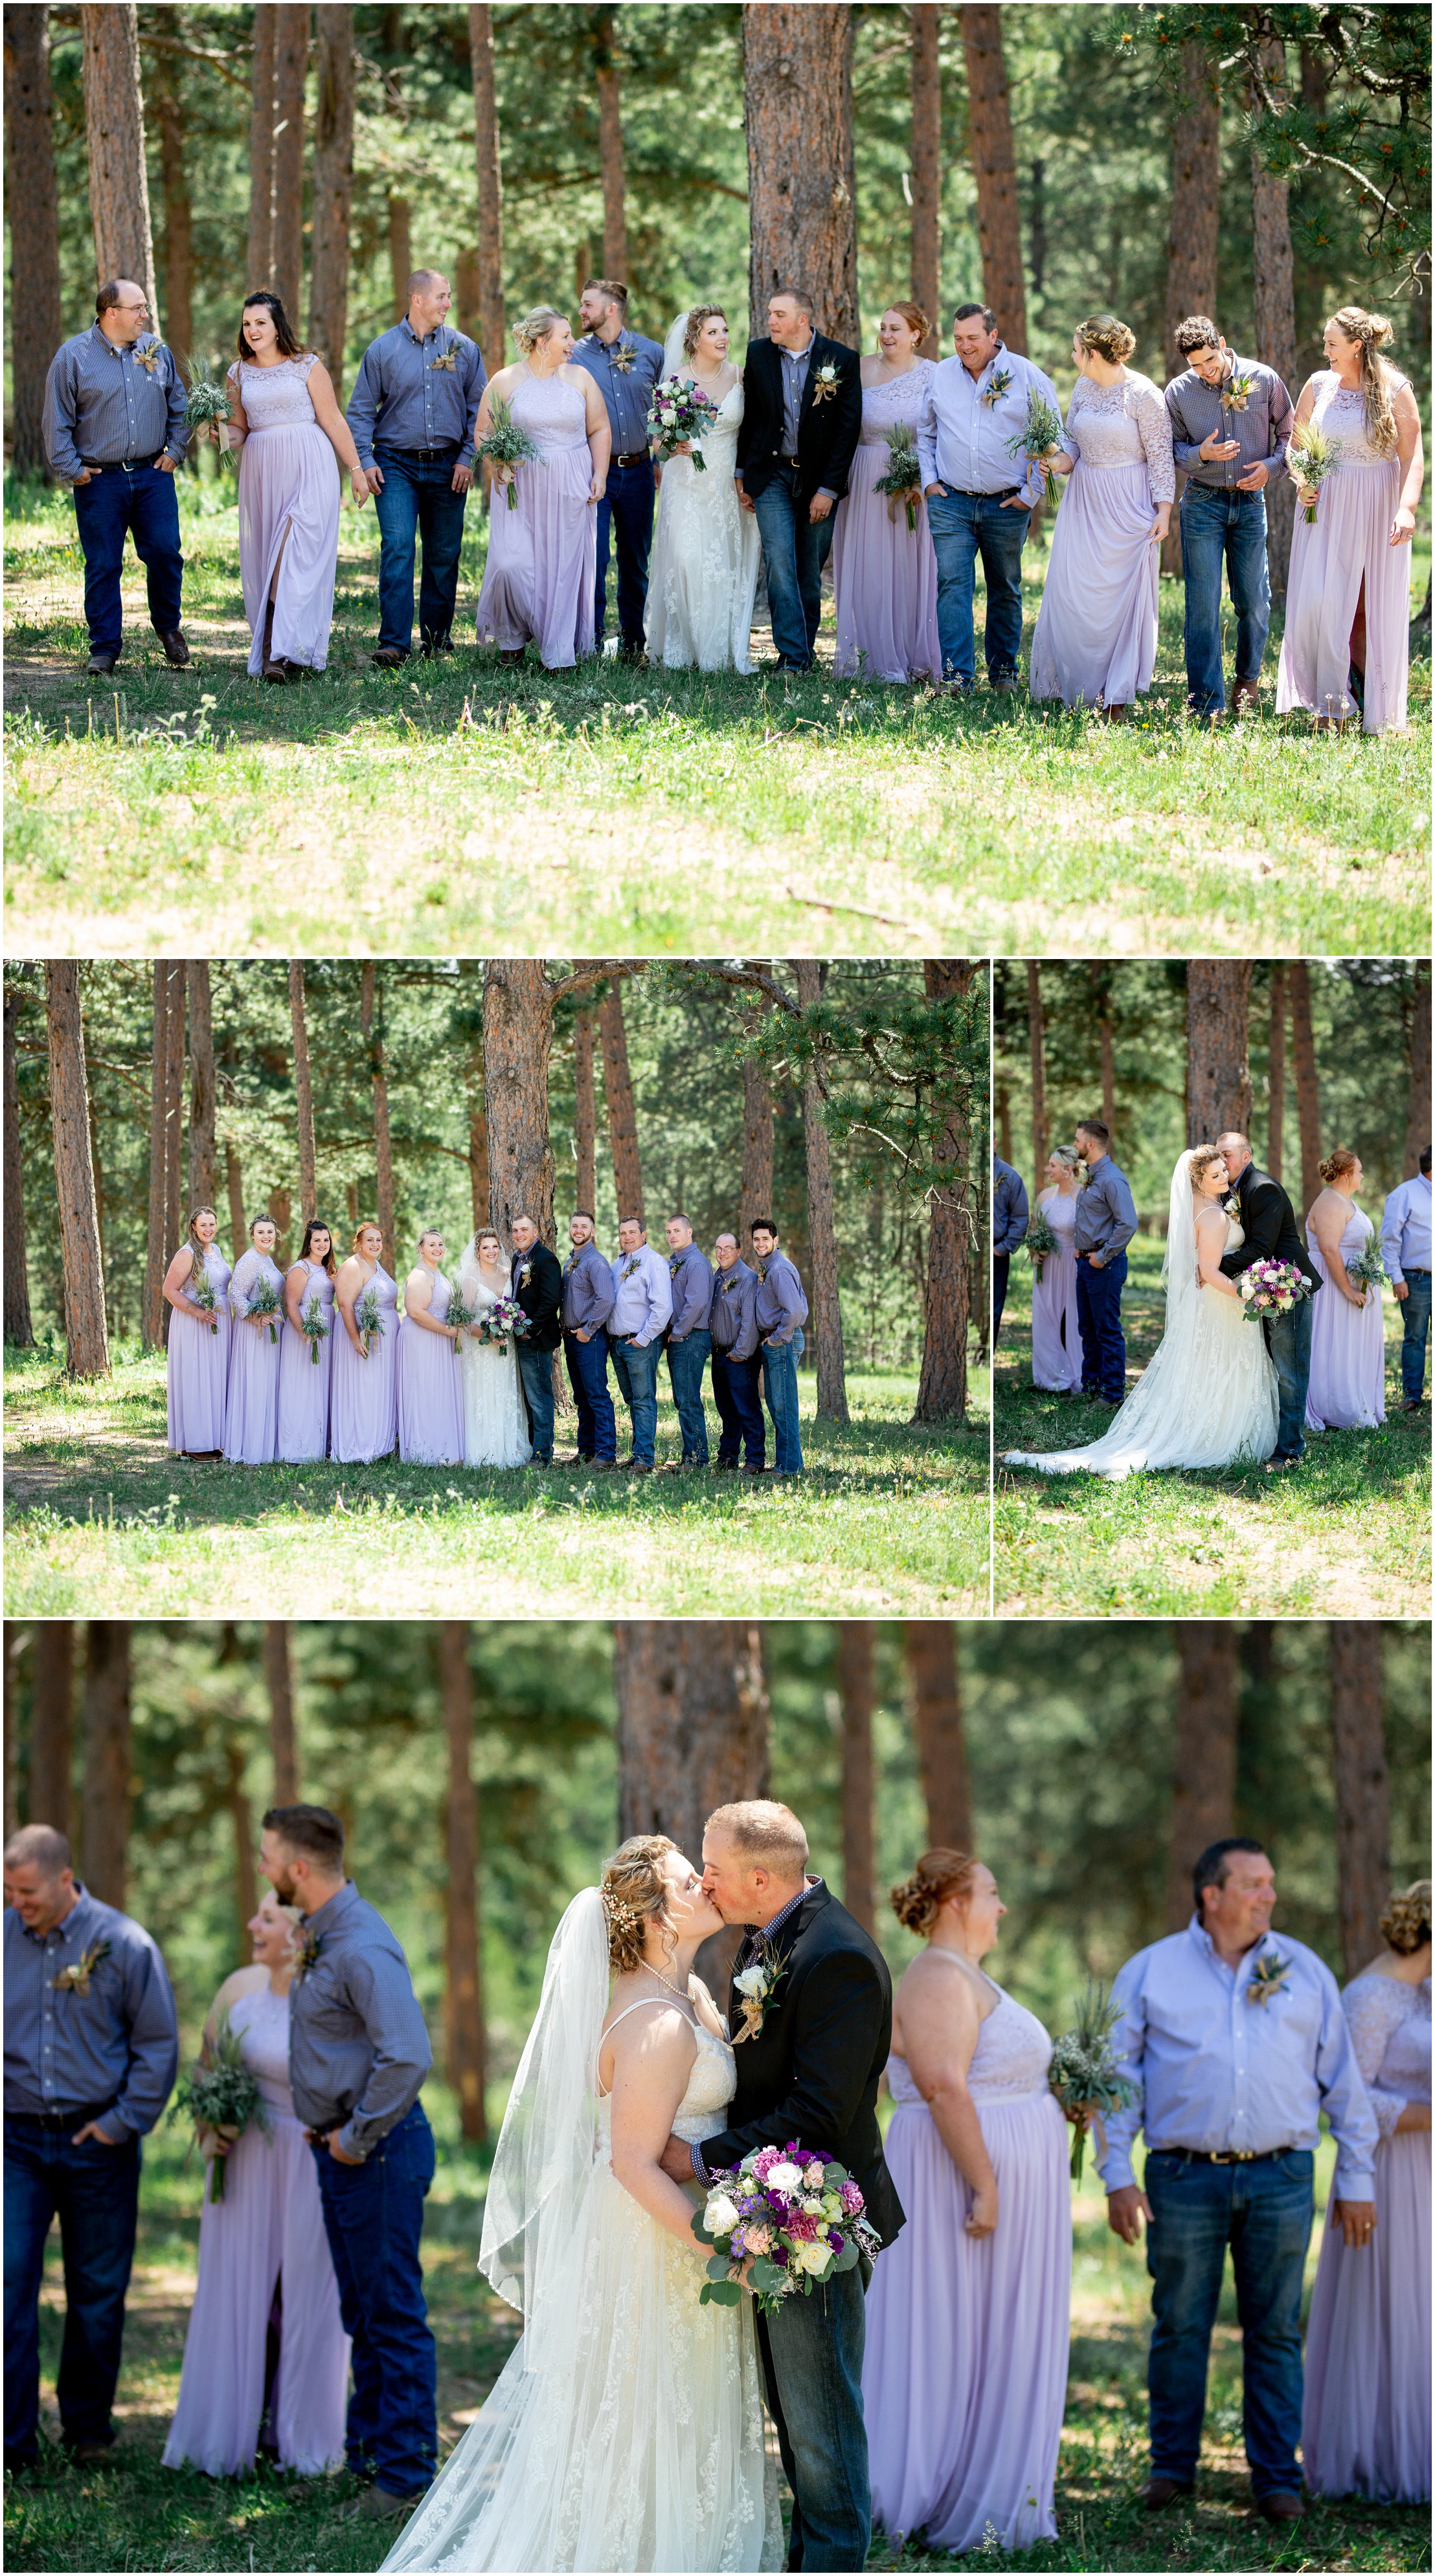 Wedding at Esterbrook Community Church near Douglas Wyoming Shot by Cheyenne, Wyoming Wedding Photographer